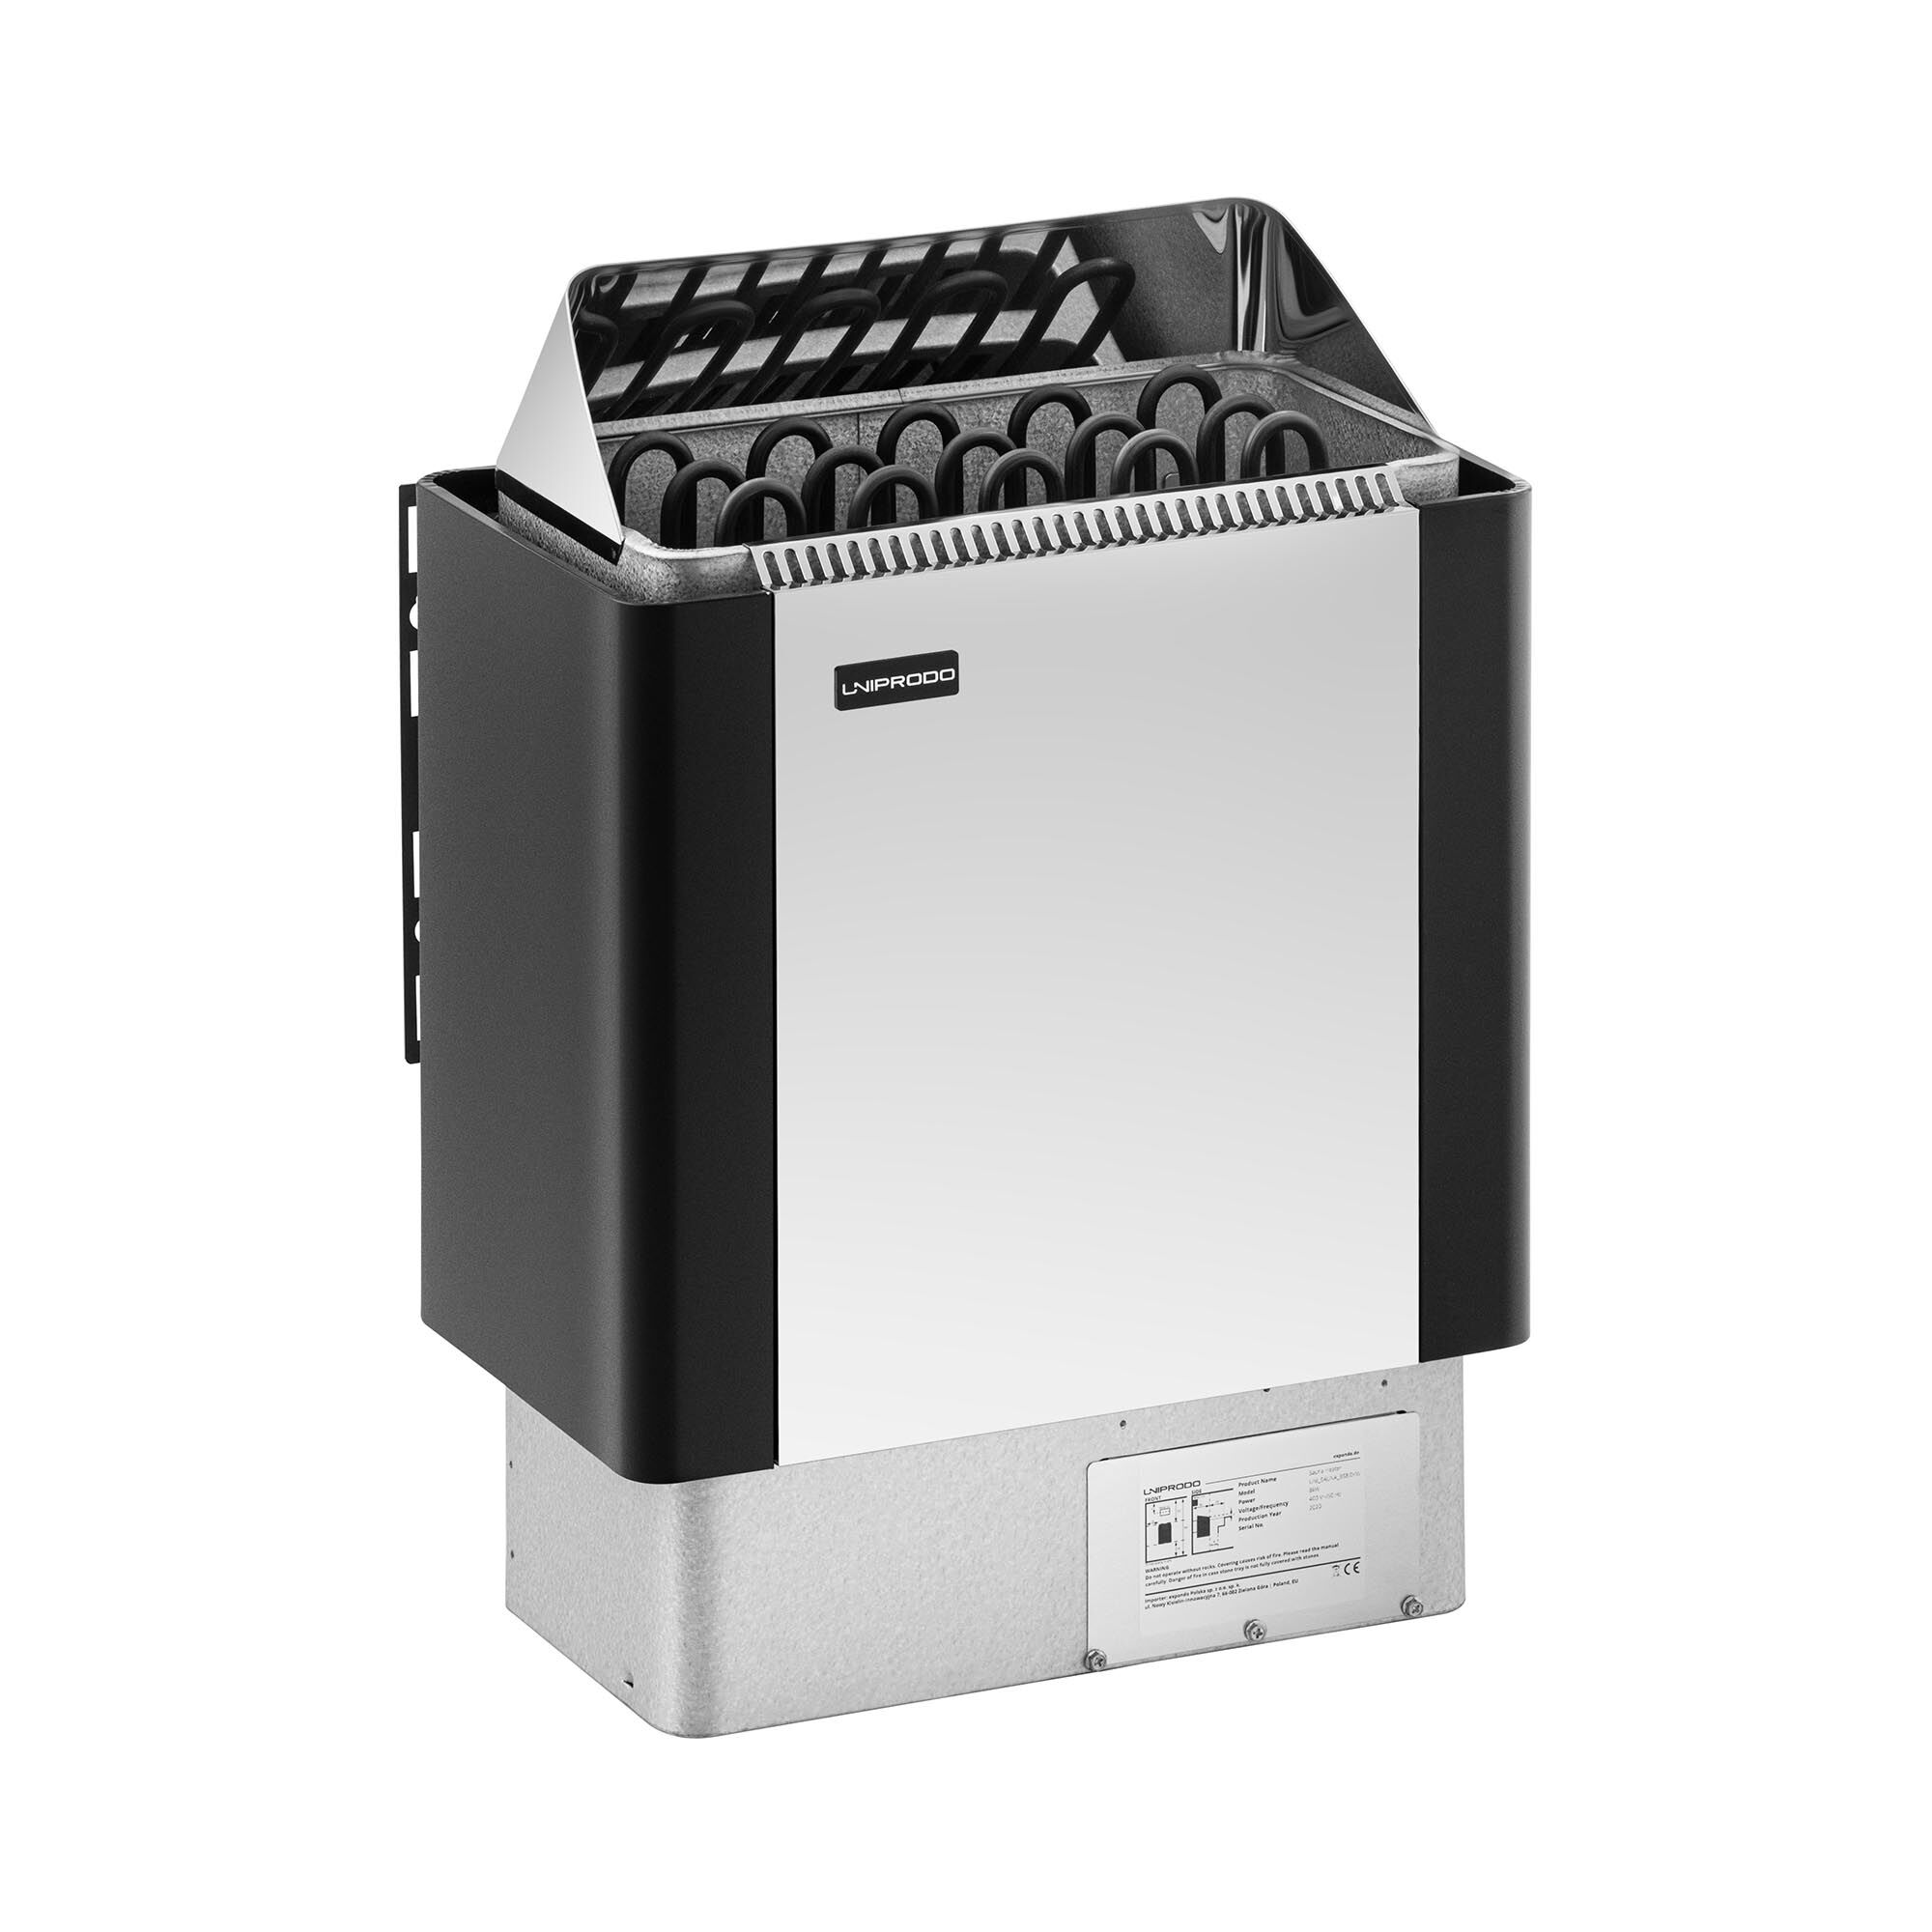 Uniprodo Saunaofen - 8 kW - 30 bis 110 °C - Edelstahlblende